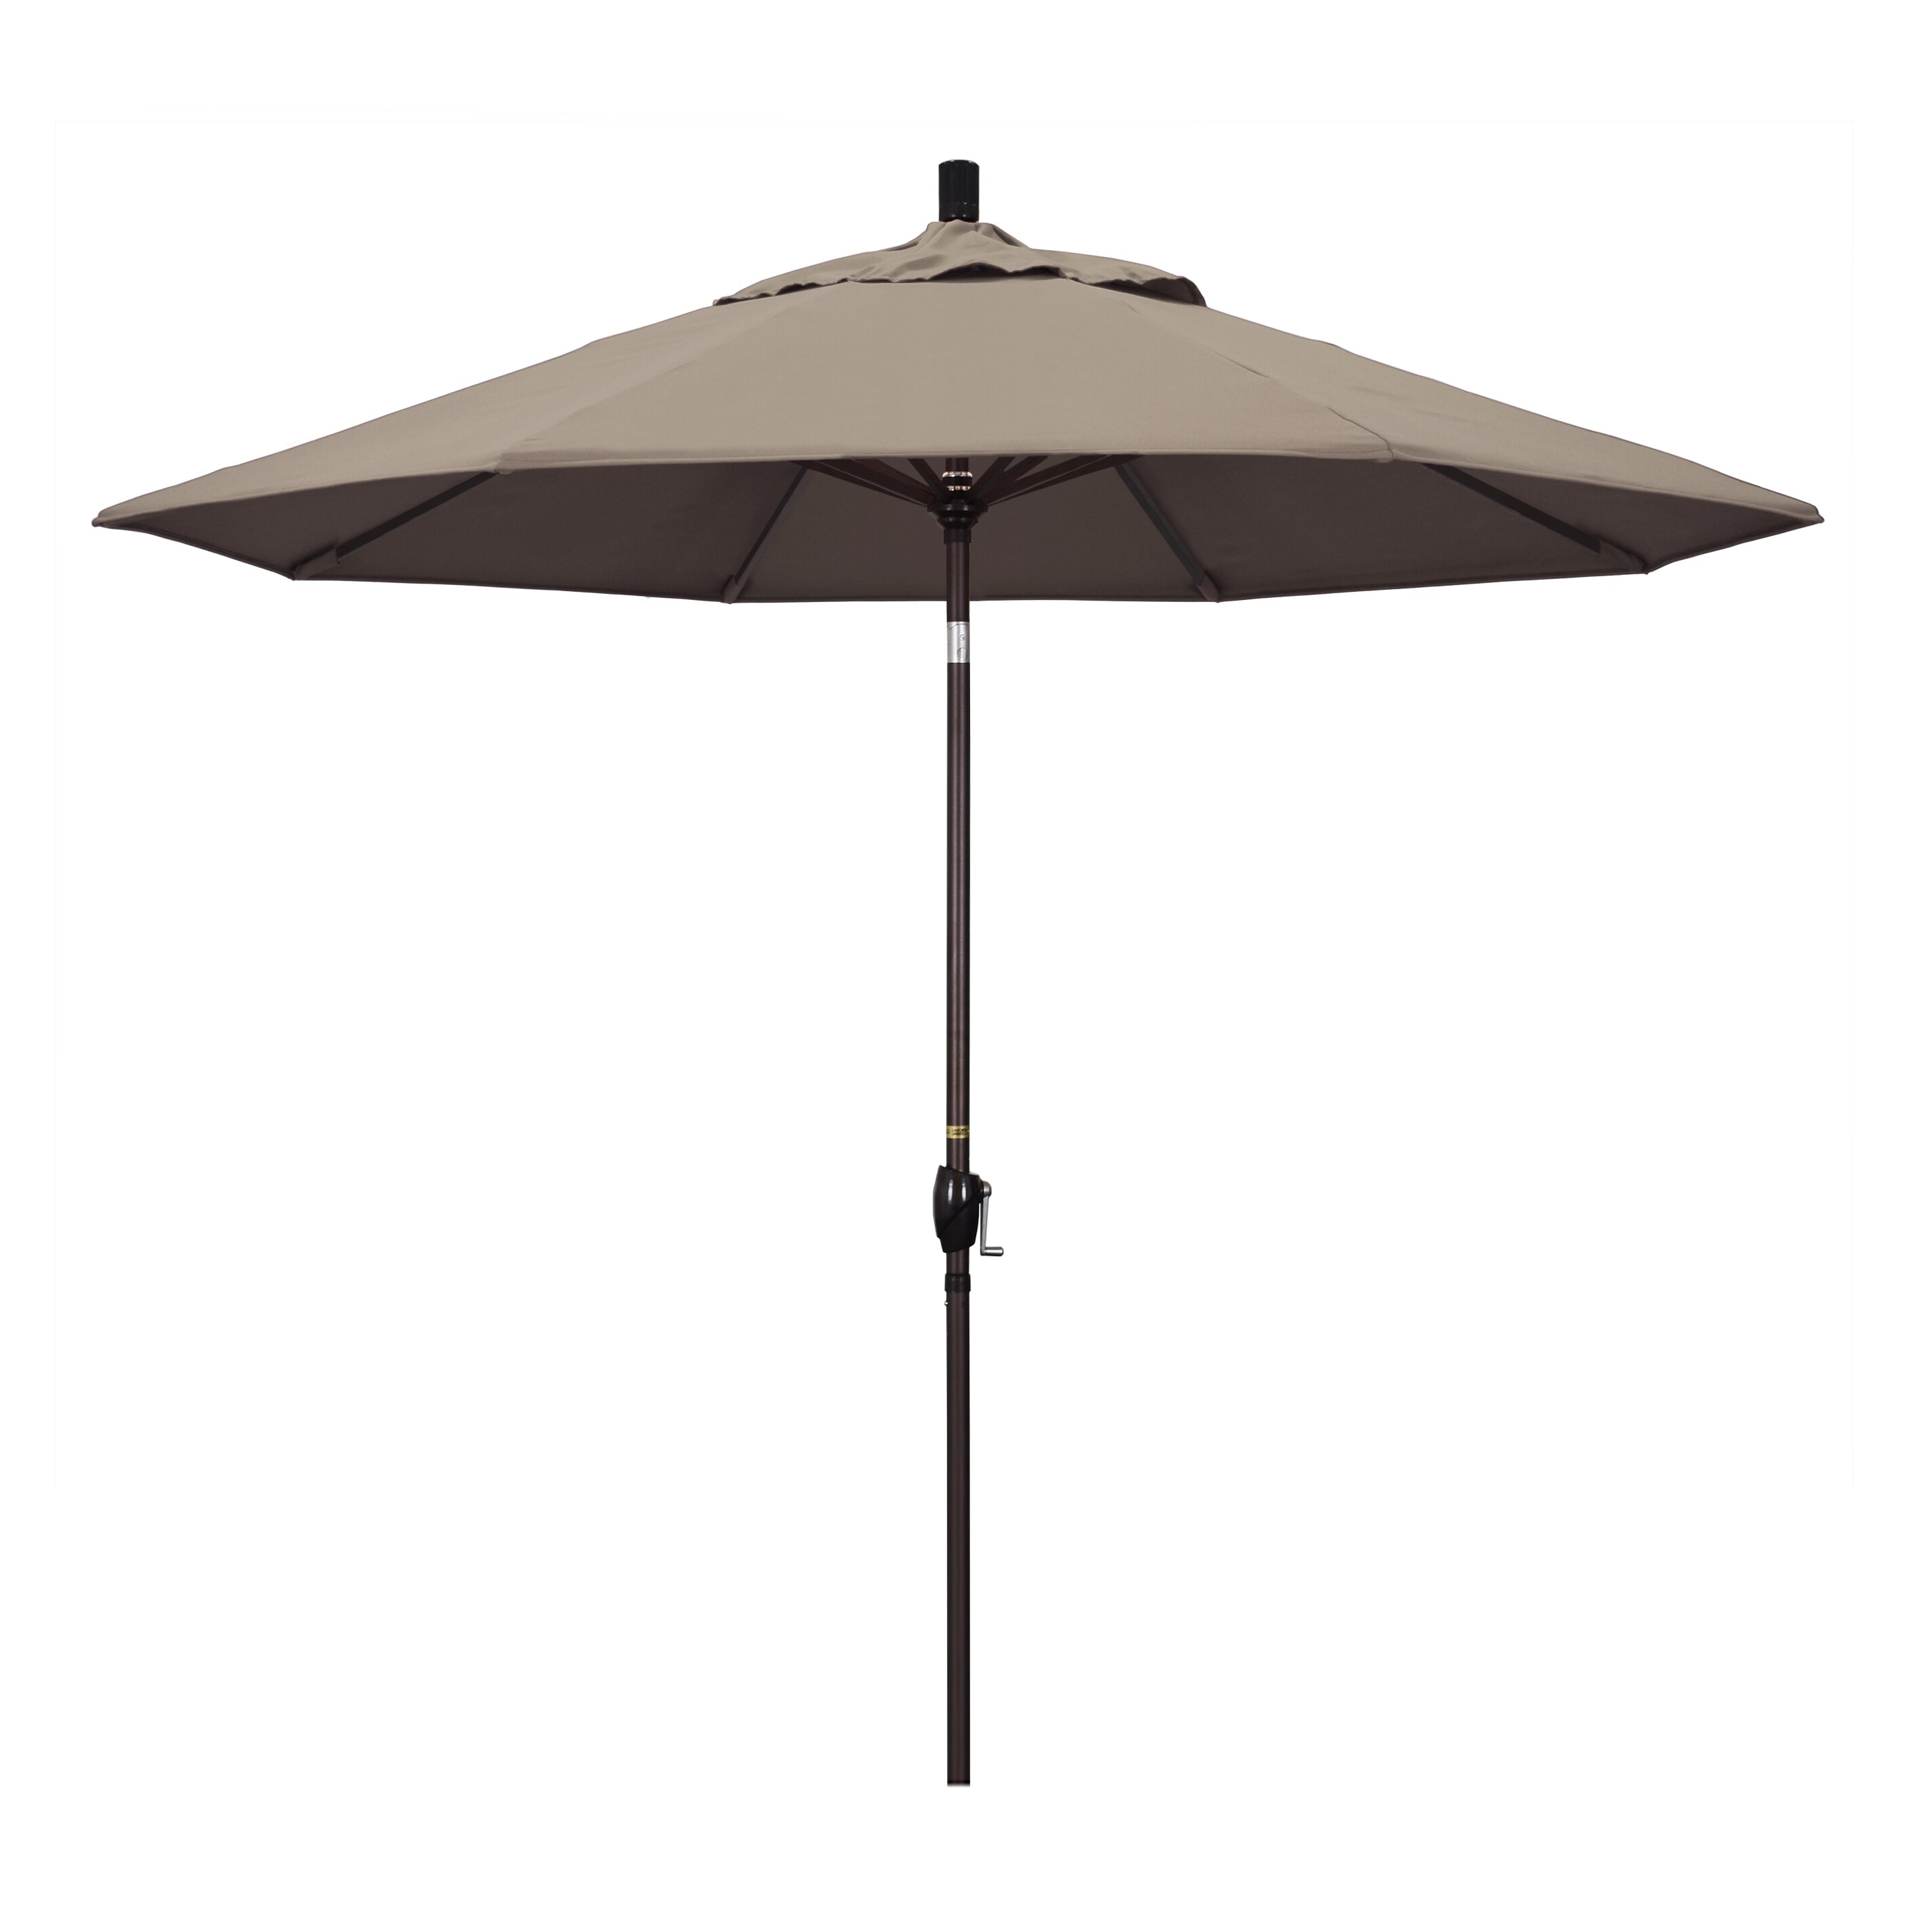 California Umbrella 7.5 Round Aluminum Patio Umbrella with Valance Antique Beige Olefin Silver Pole 3-Way Tilt Crank Lift 